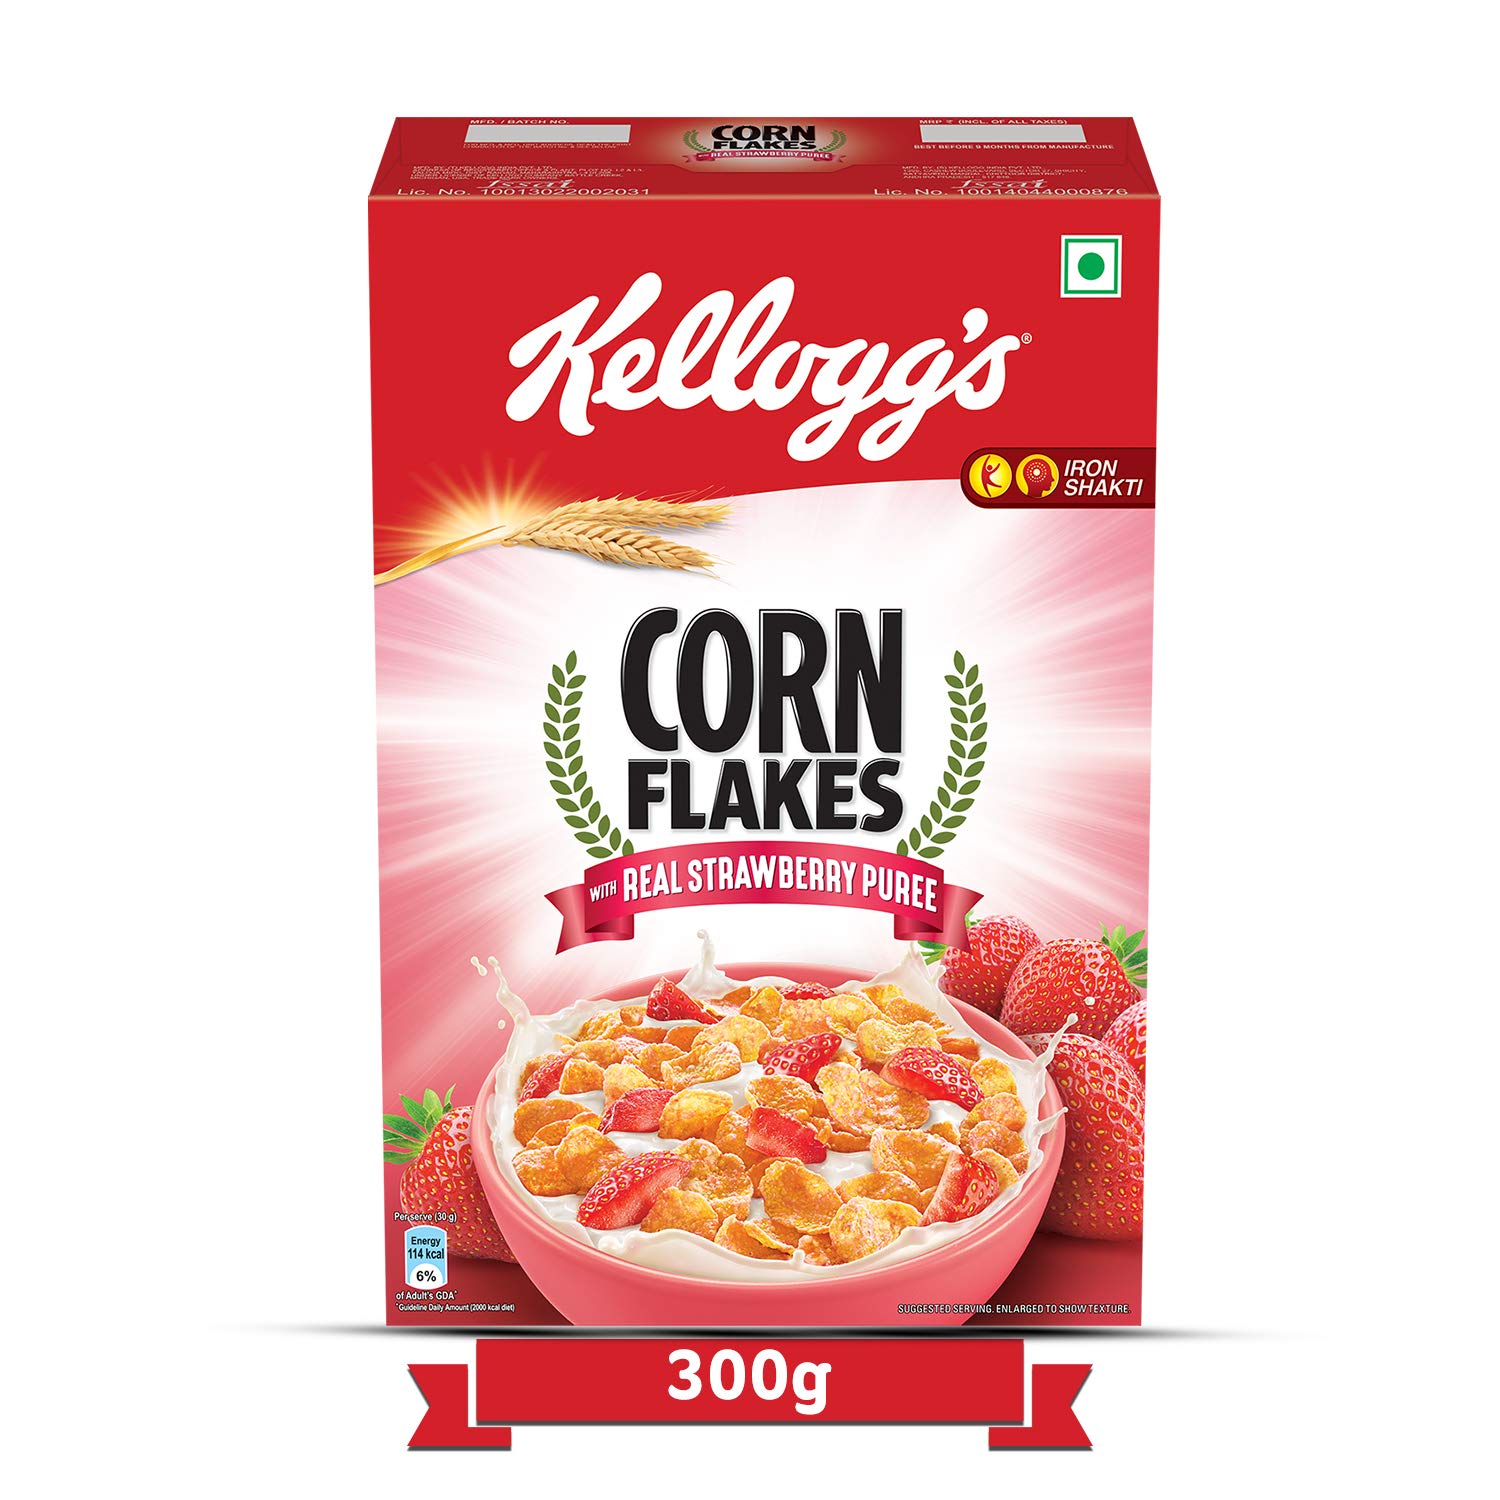 Kellogg's Real Strawberry Corn Flakes 500g